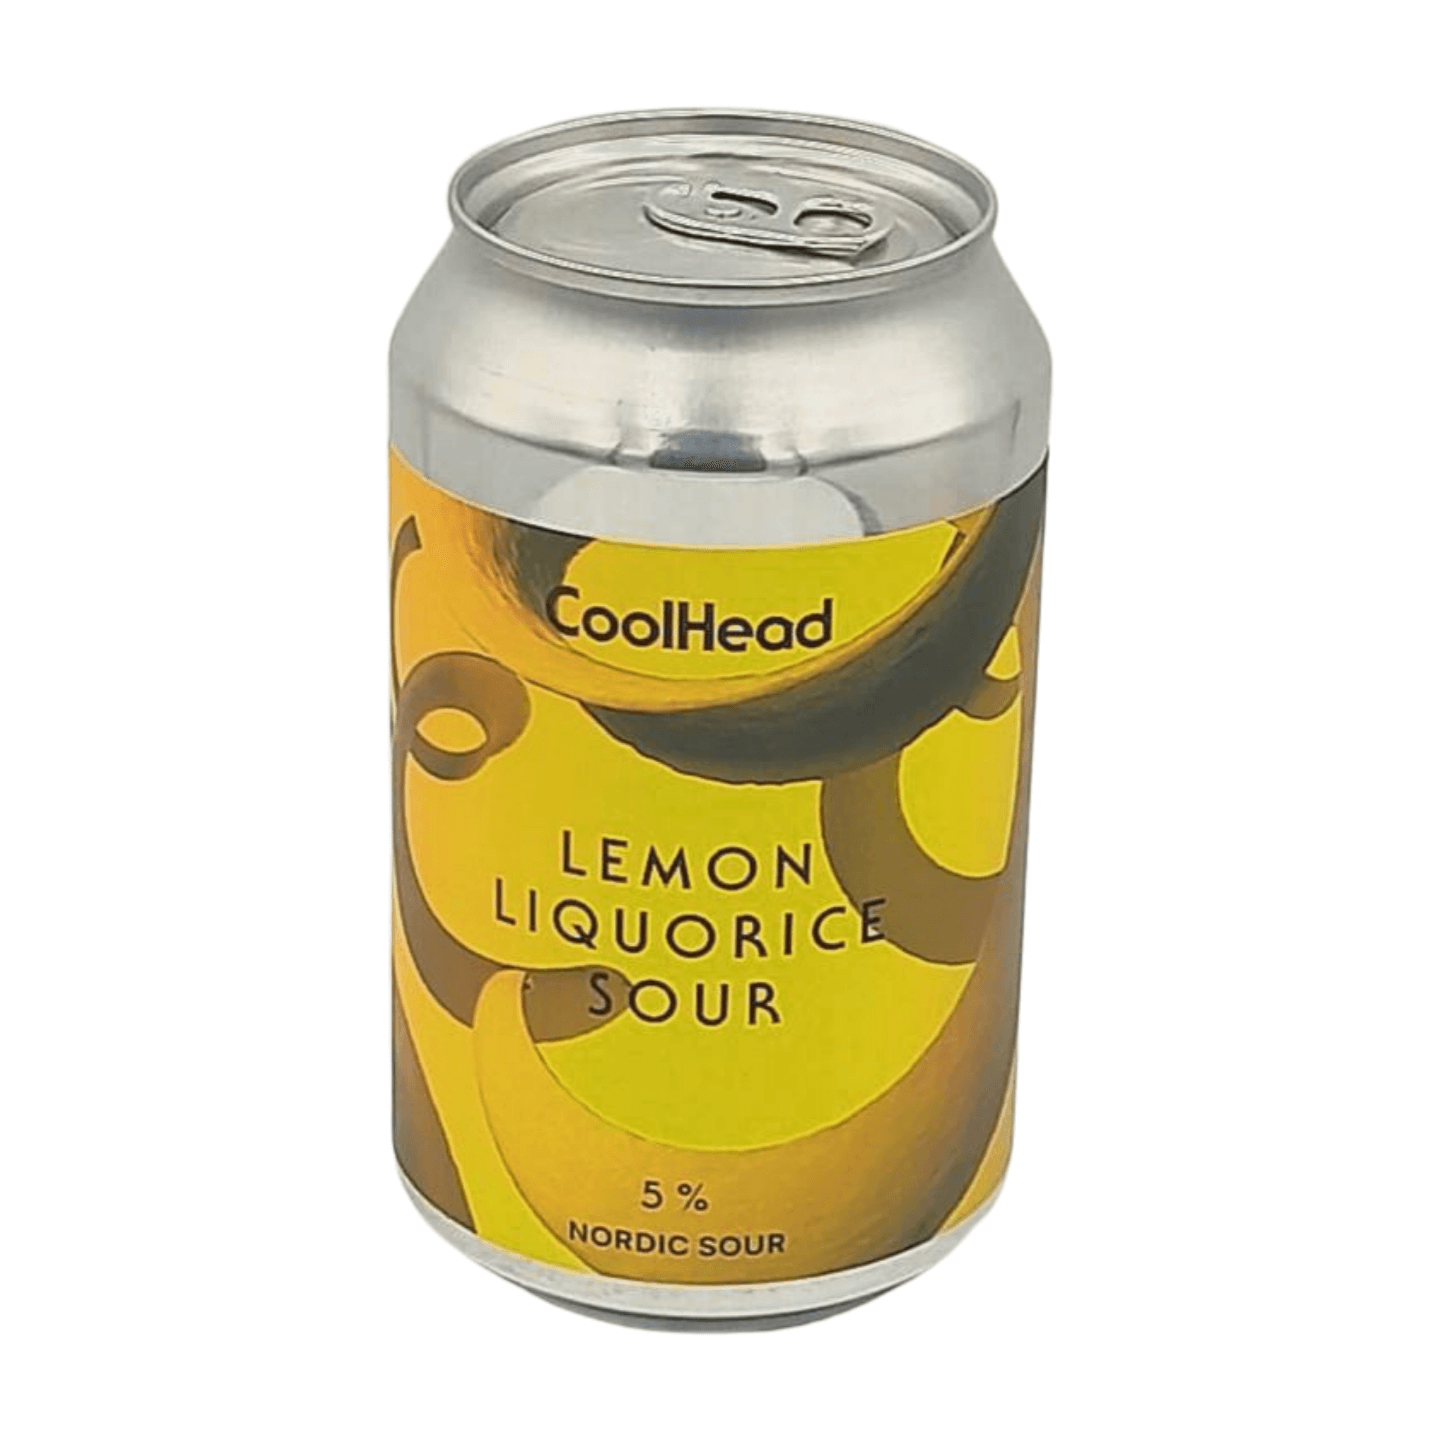 Coolhead Lemon Liquorice | Sour Webshop Online Verdins Bierwinkel Rotterdam